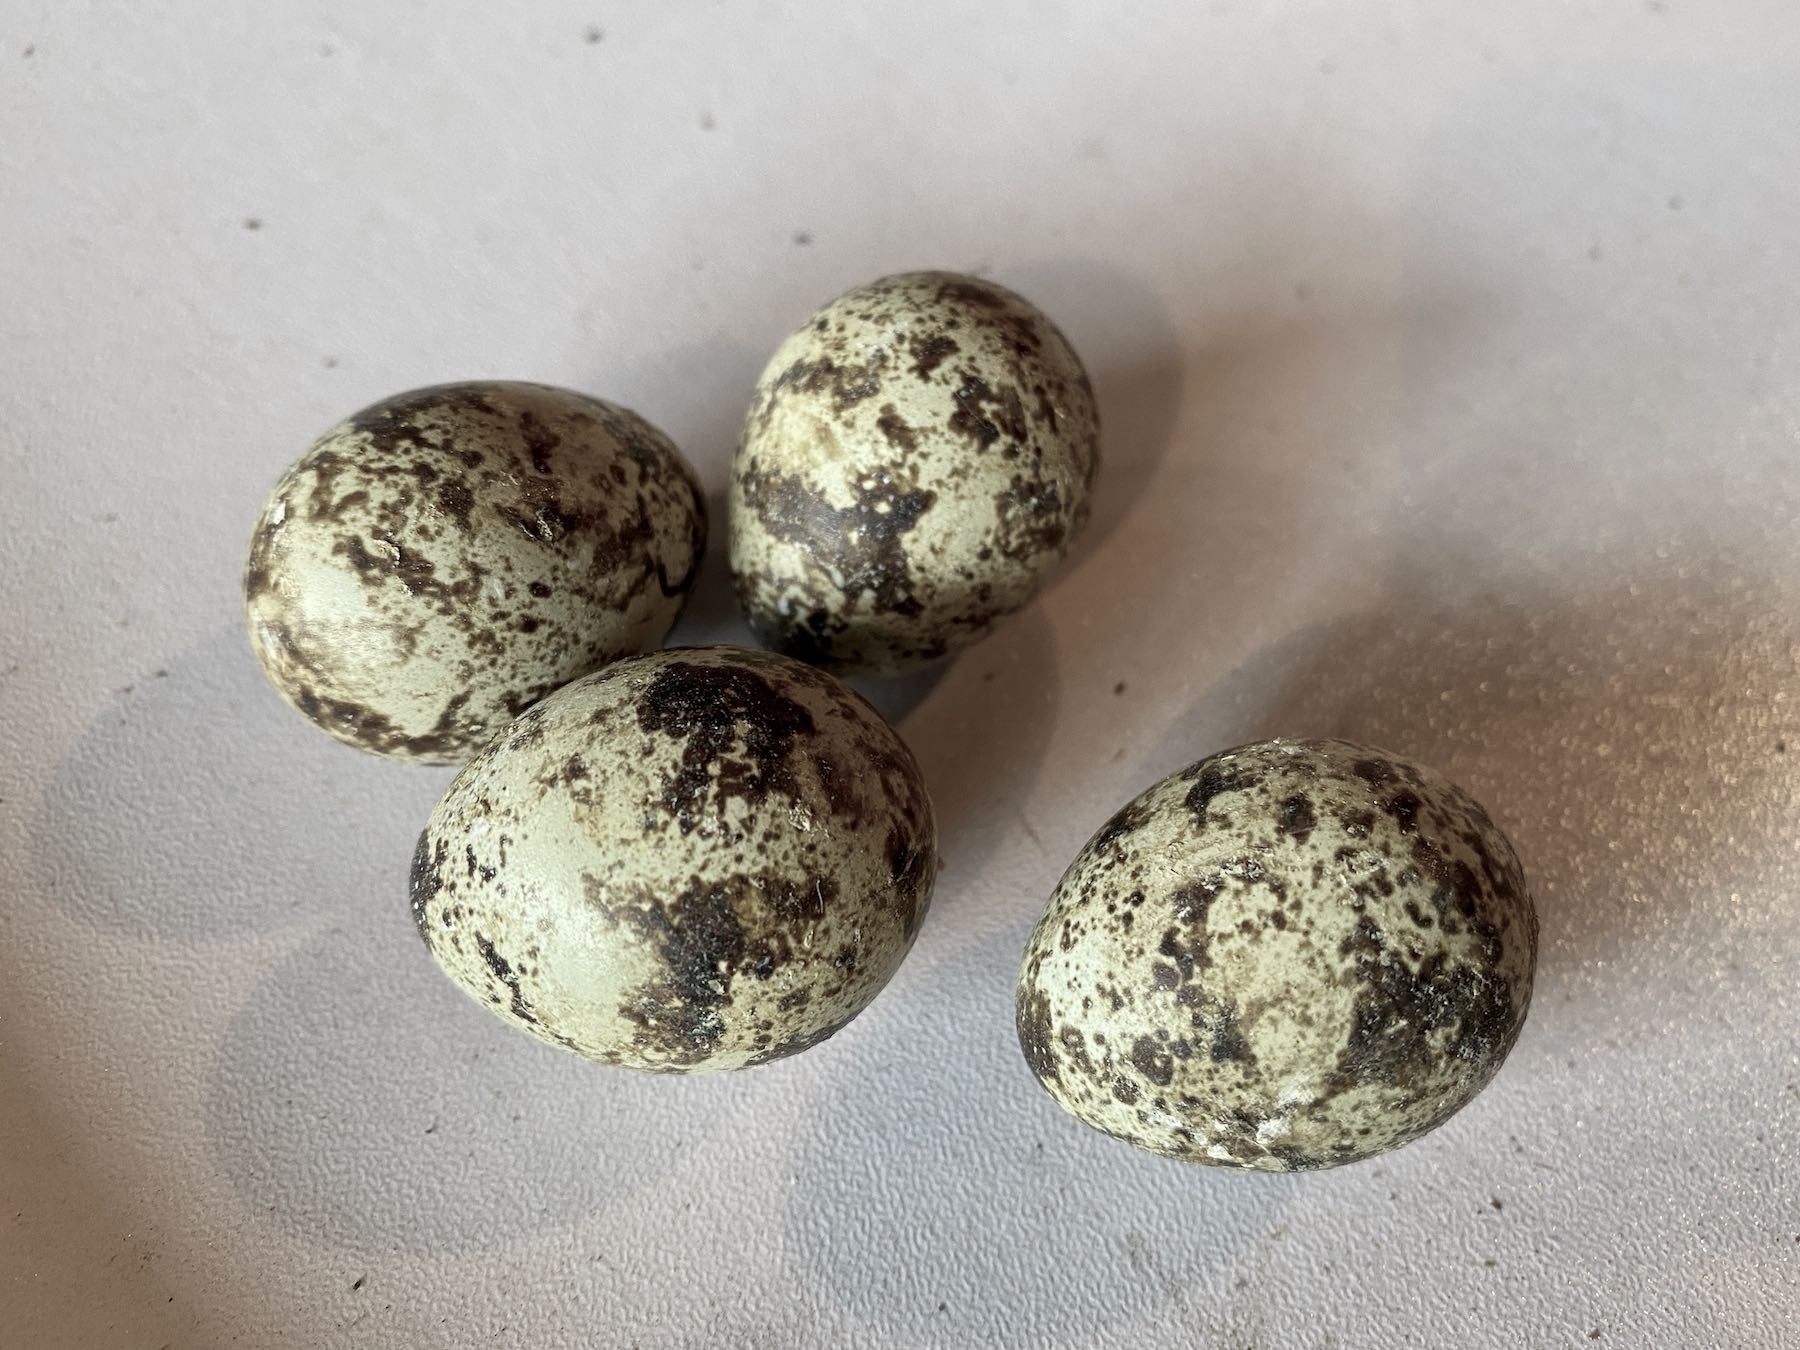 4 quail eggs. 